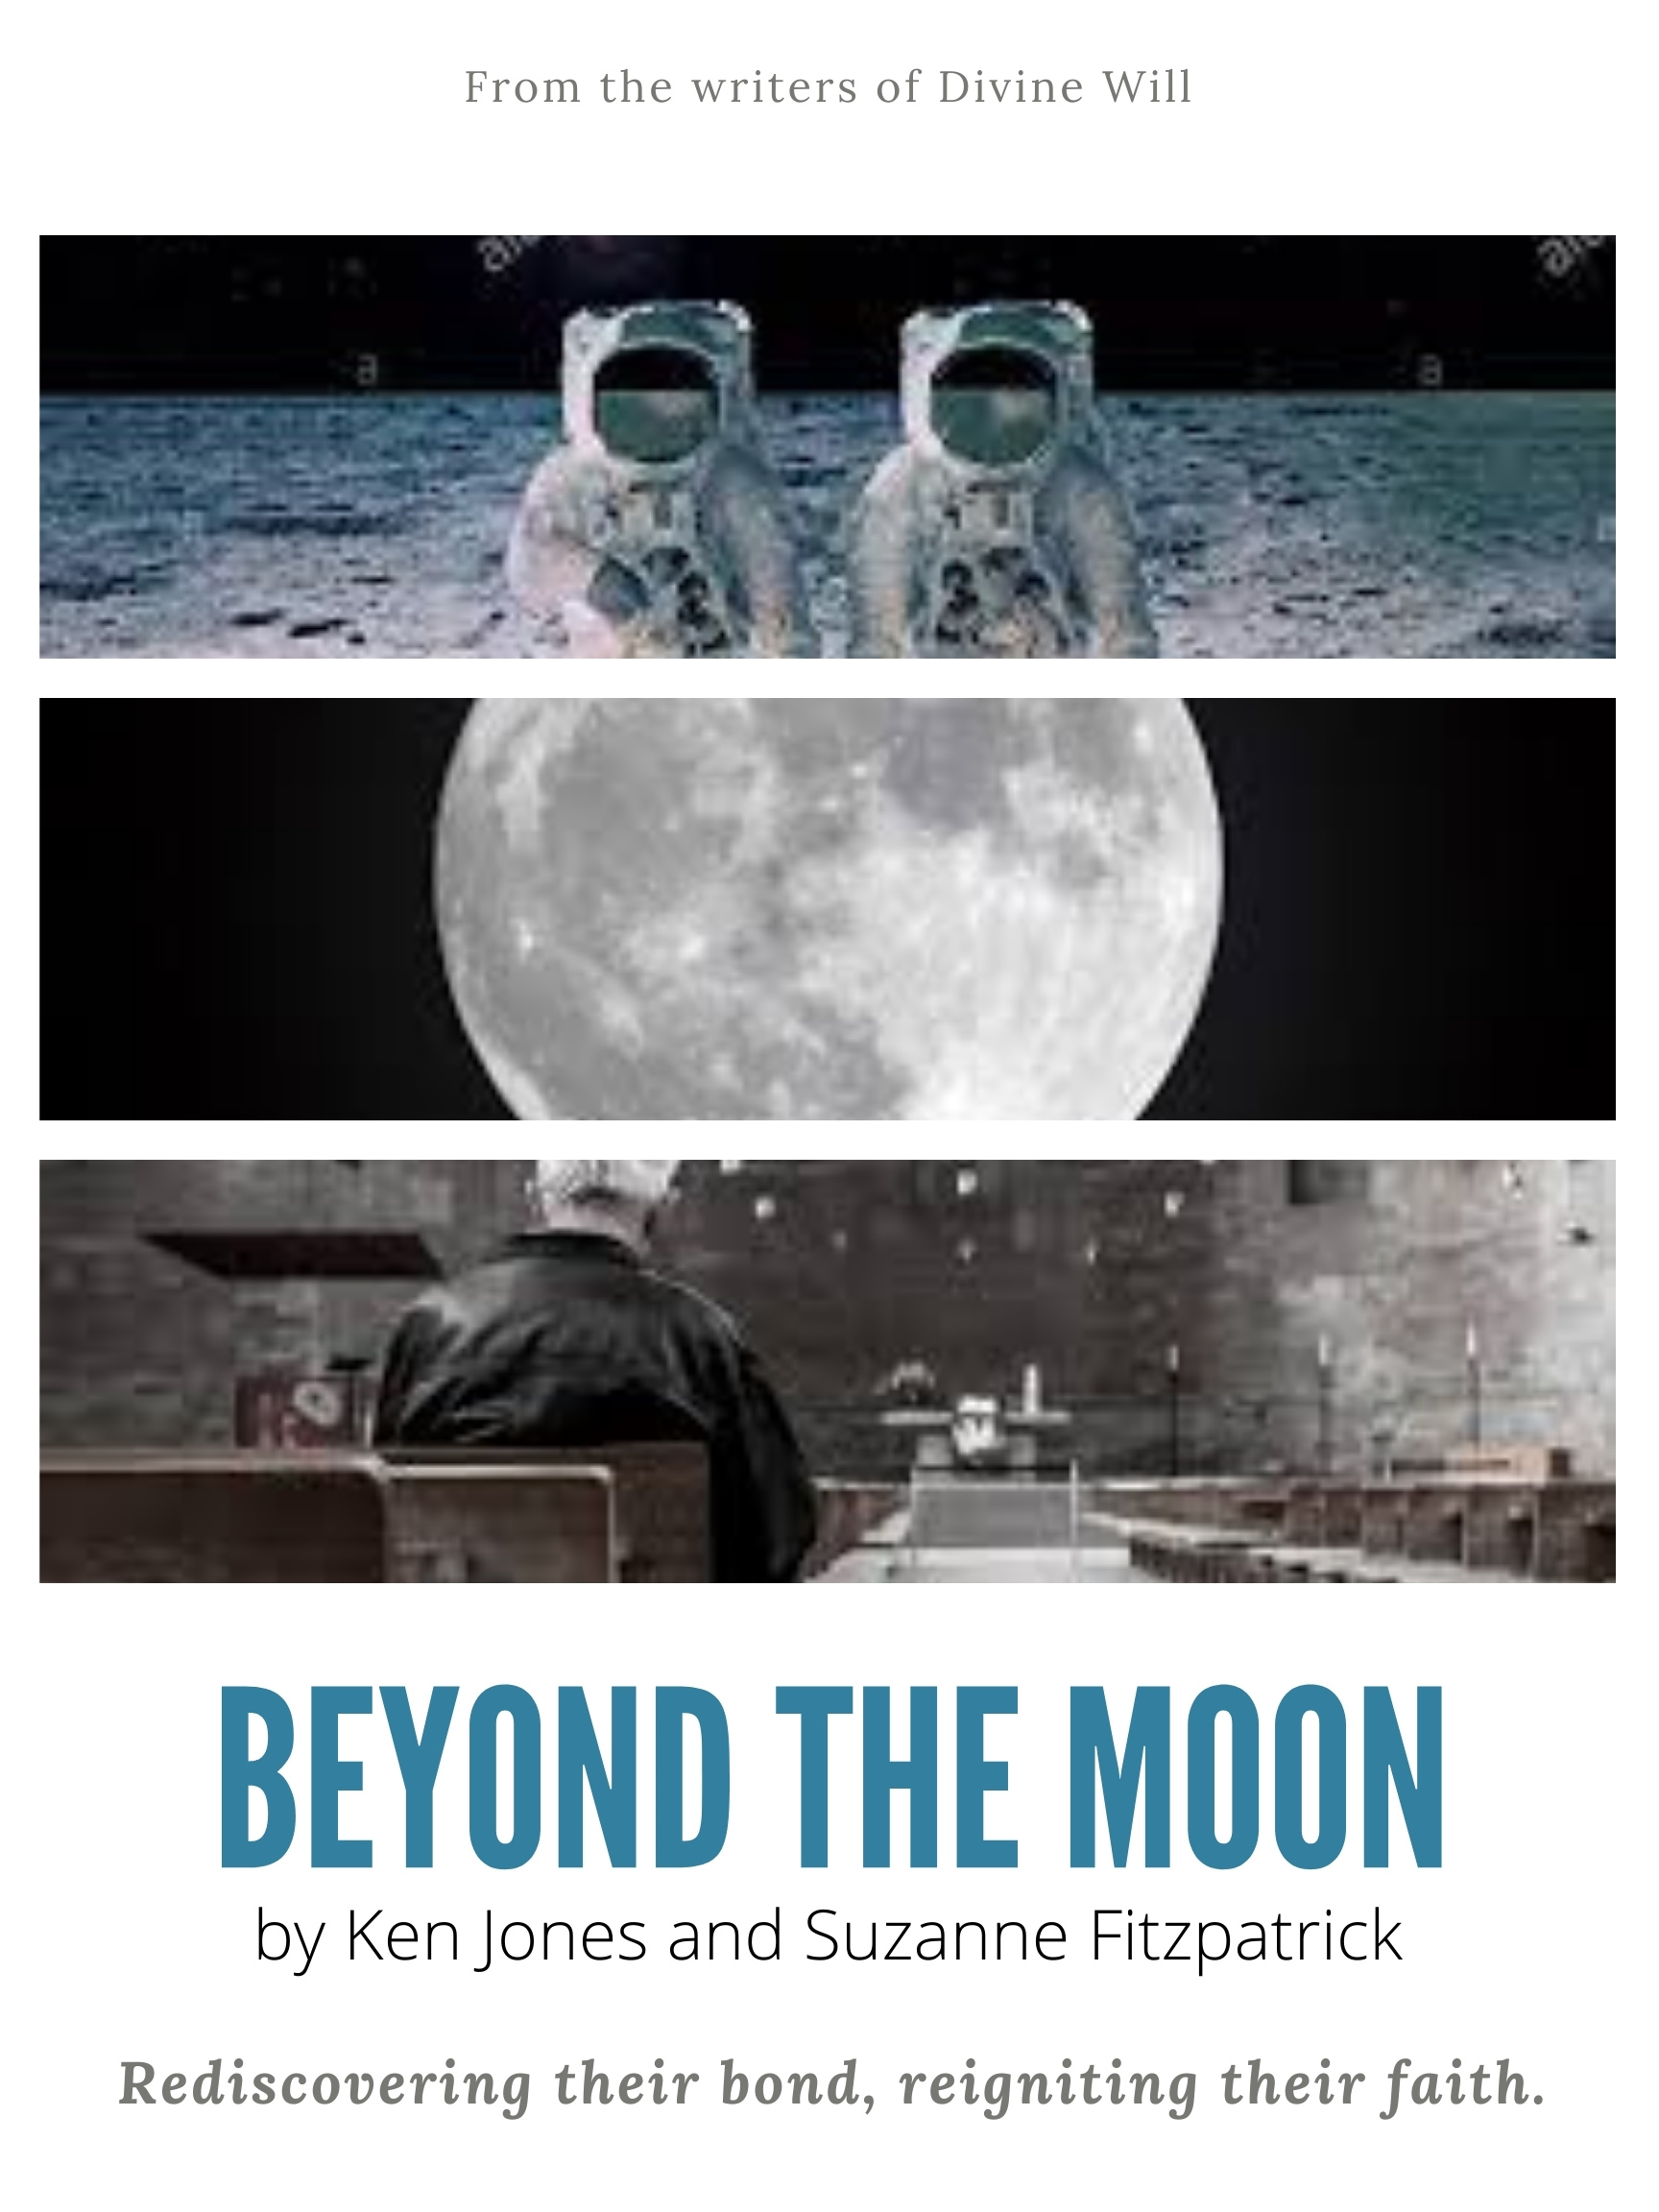 Beyond the Moon (2021)